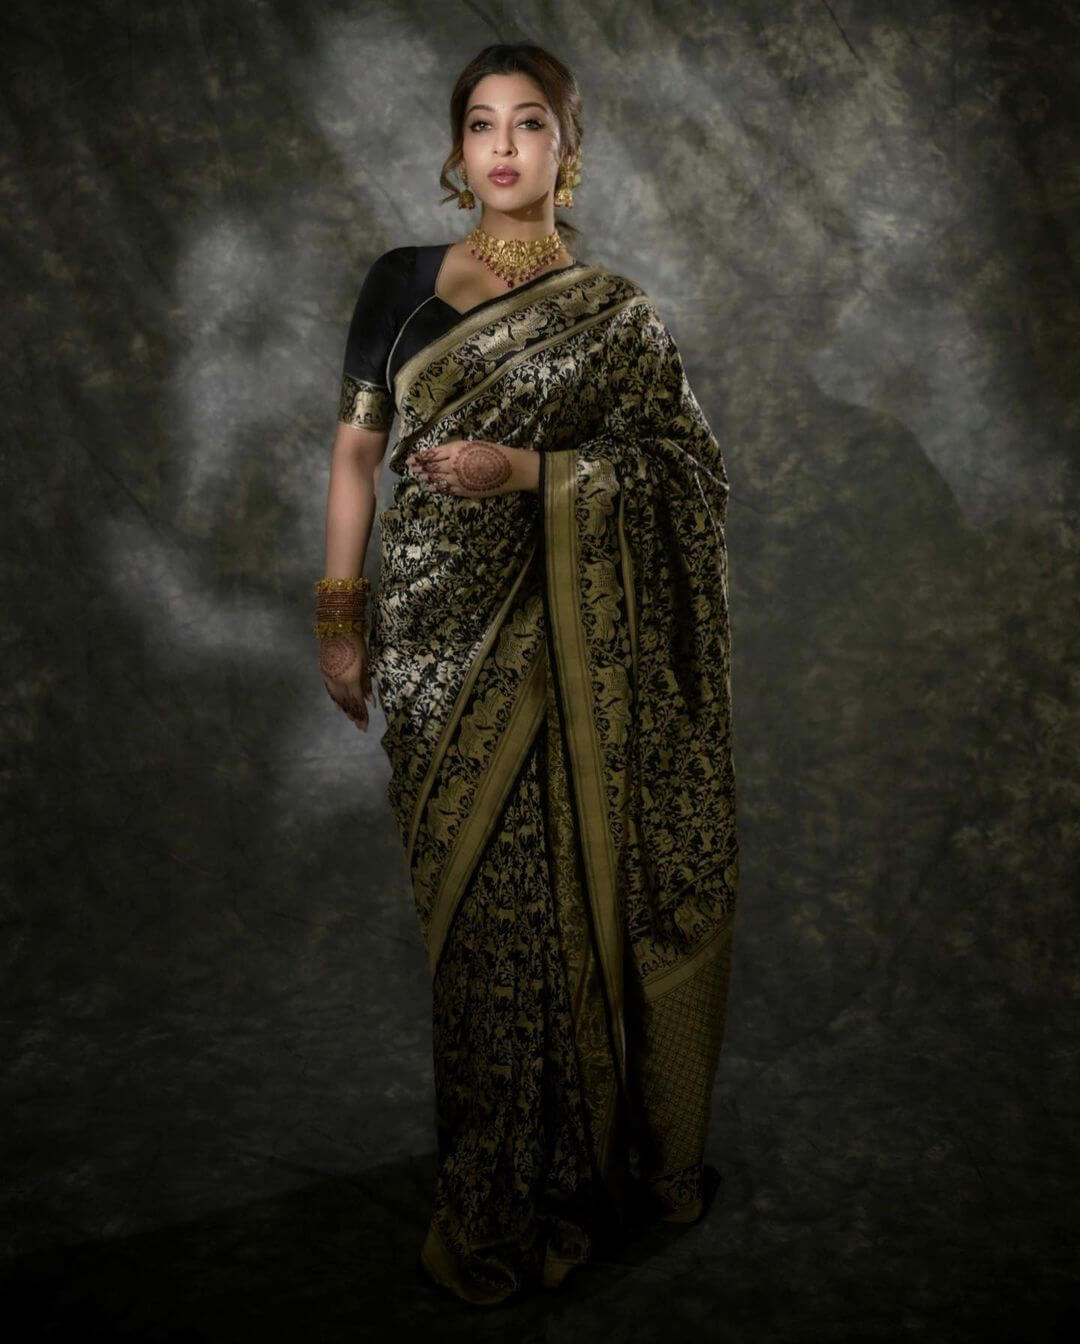 TV Actress Sonarika  Bhadoria In Traditional Bhartiya Nari Look In Banarasi Saree With Heavy Gold Jewellery